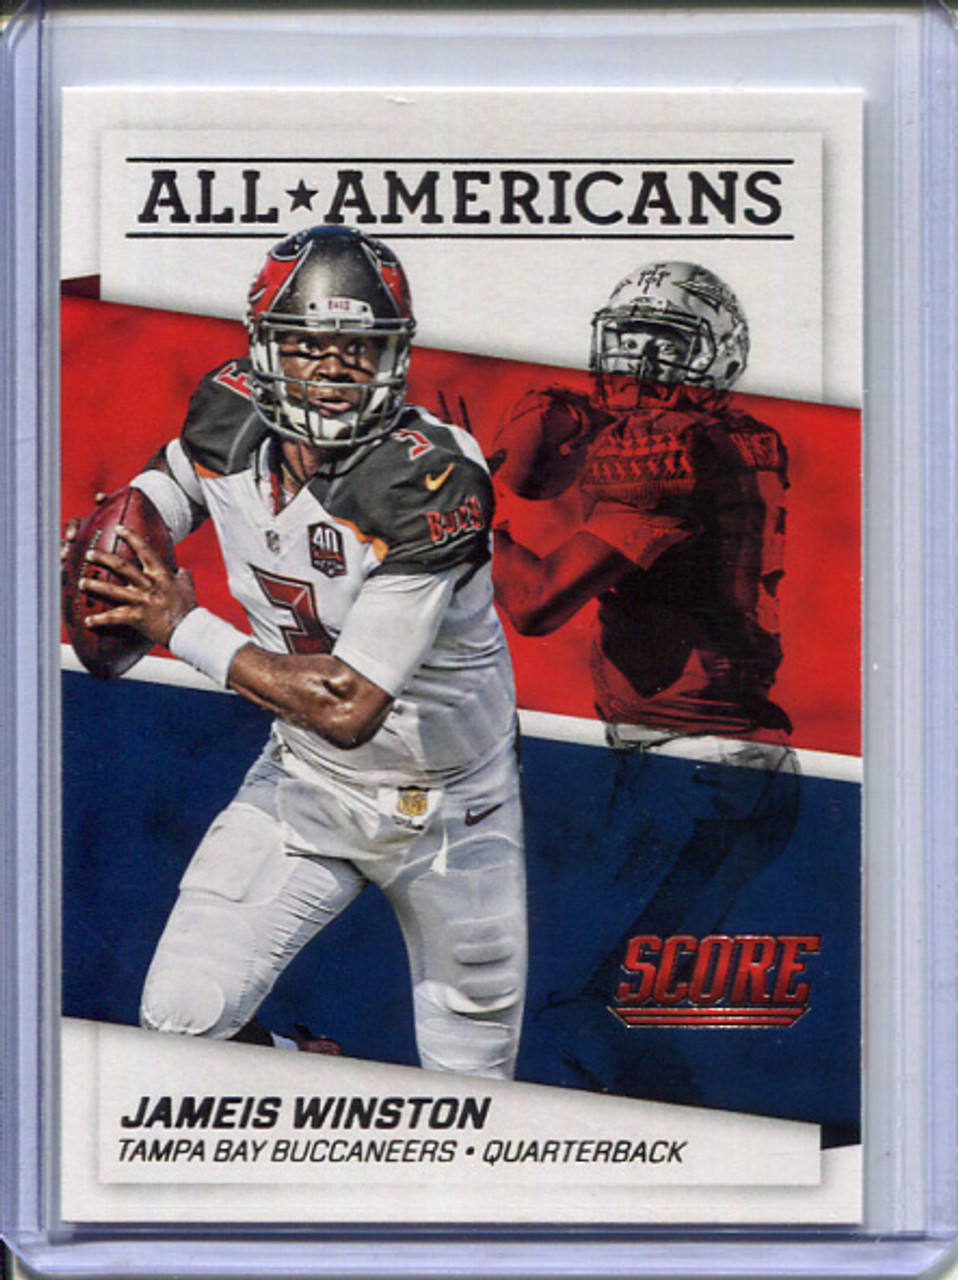 Jameis Winston 2016 Score, All Americans #6